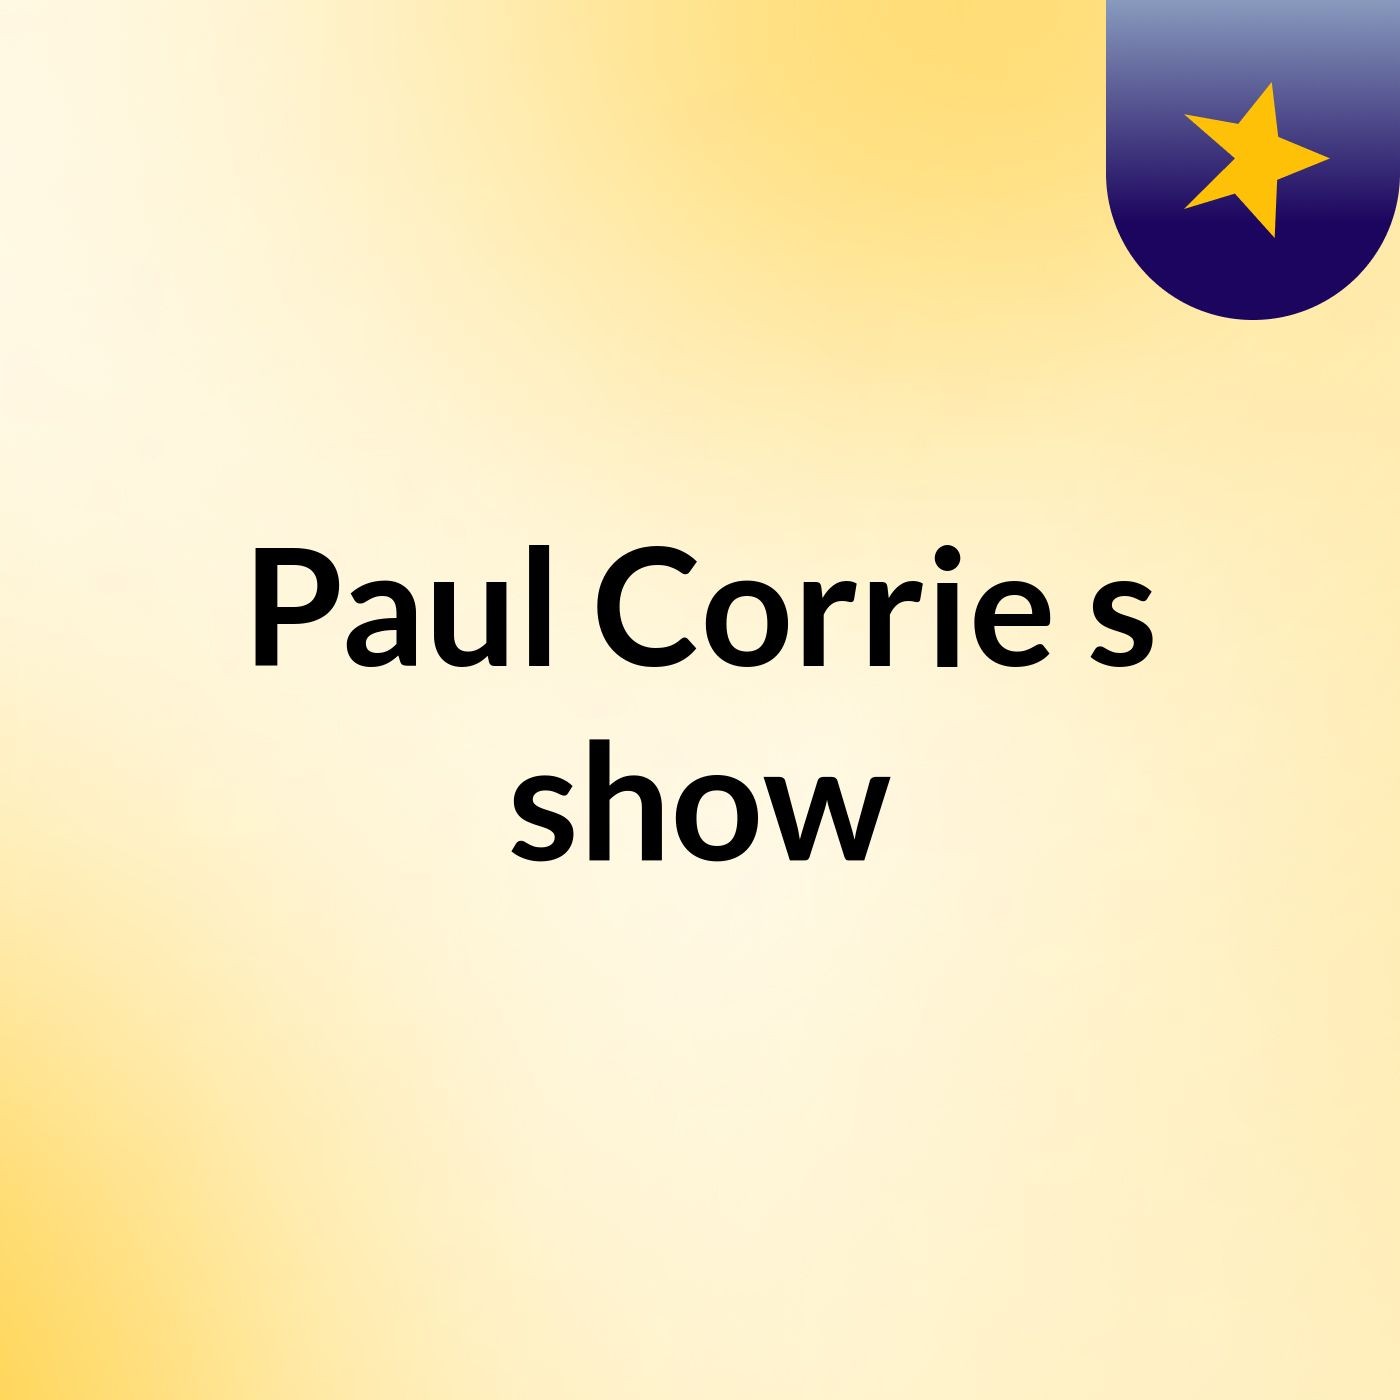 Paul Corrie's show